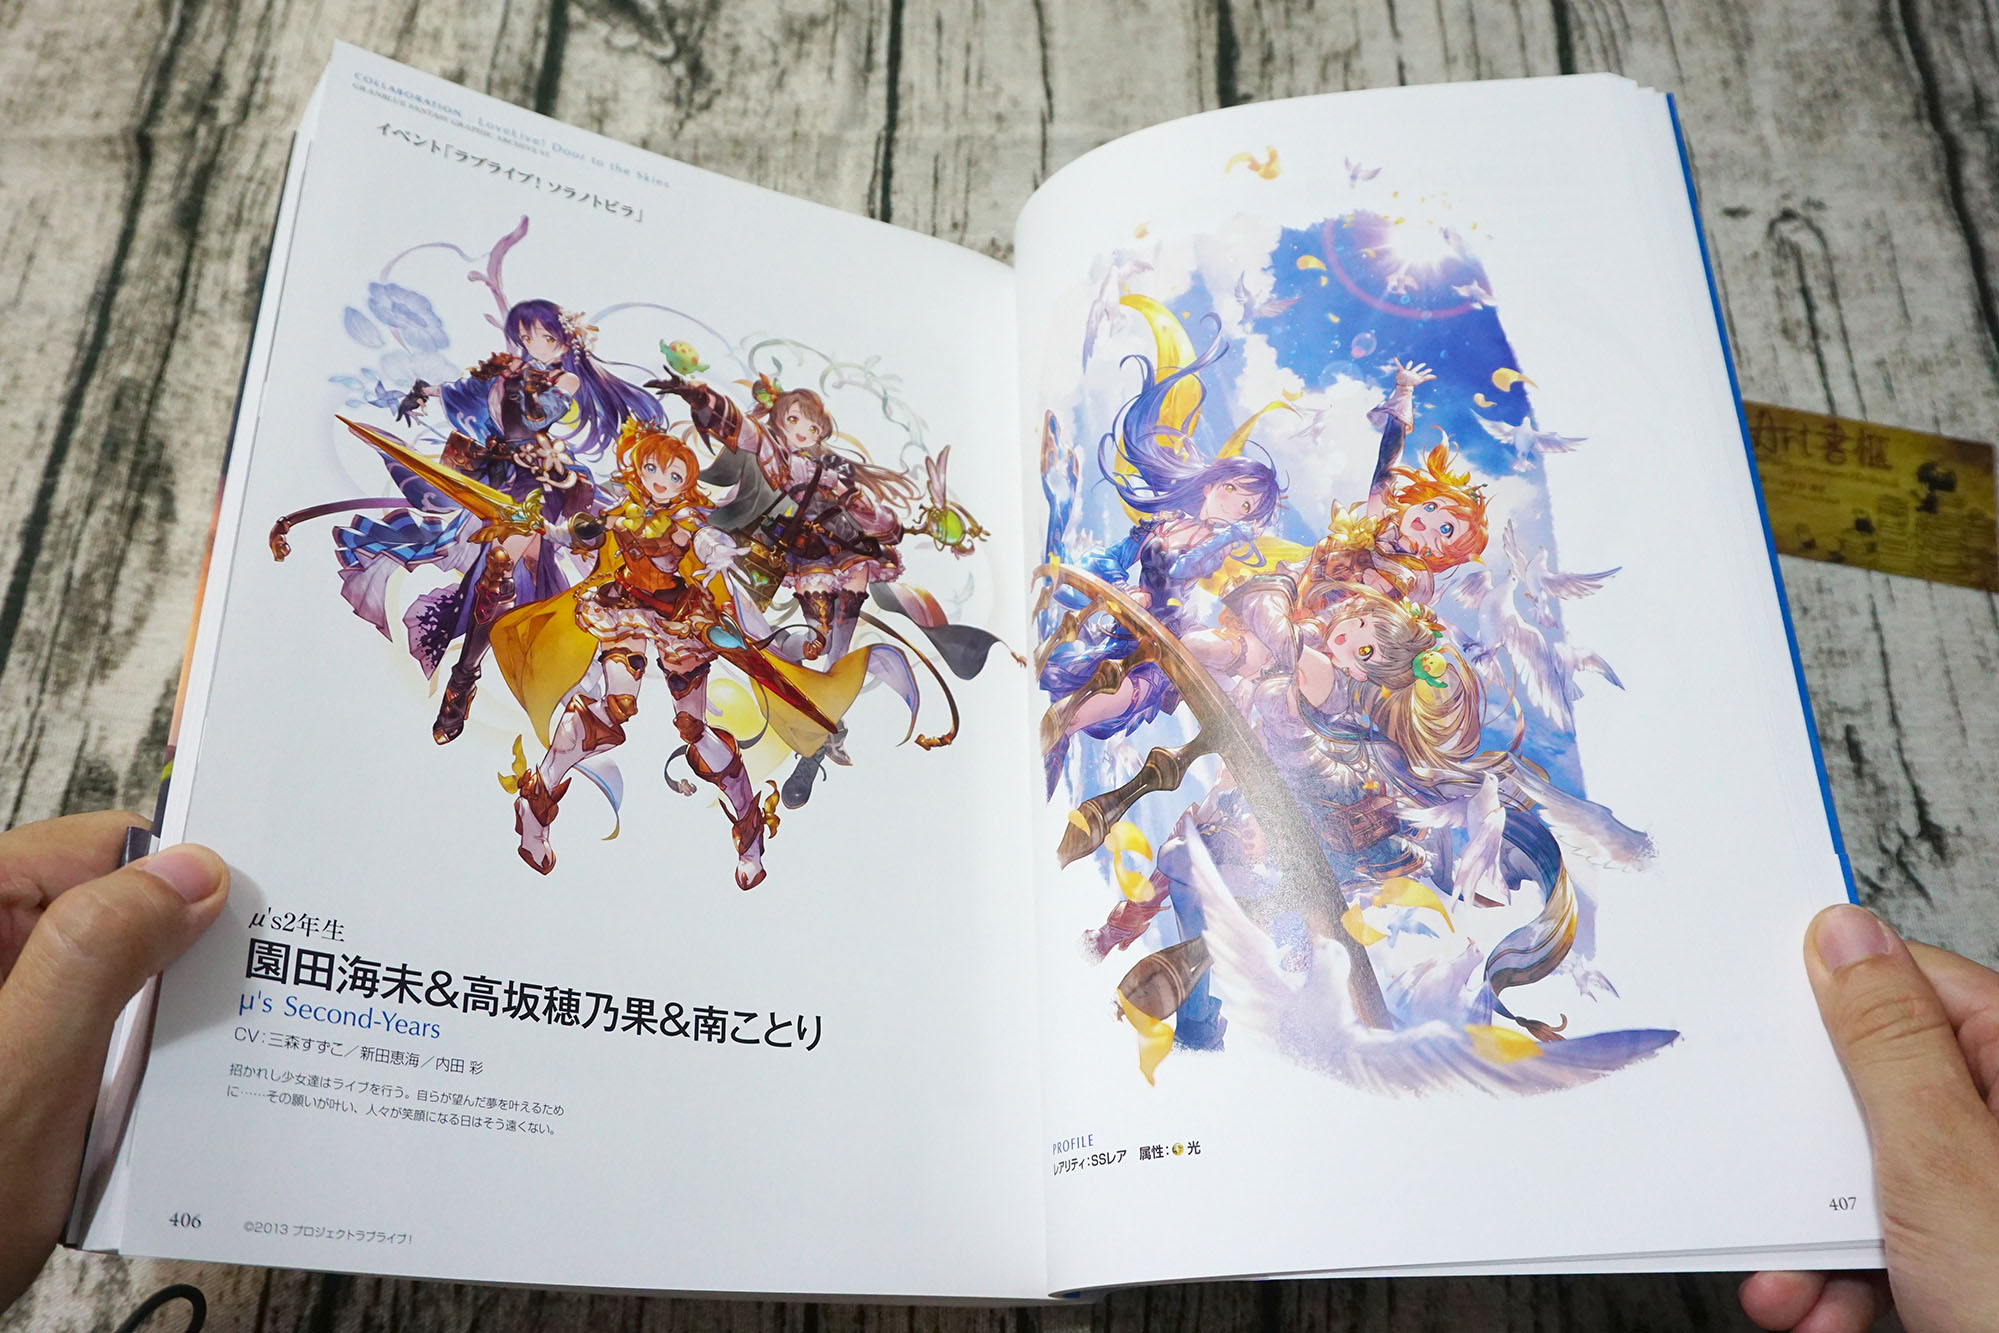 Granblue Fantasy Graphic Archive VII: Extra Works - Tokyo Otaku